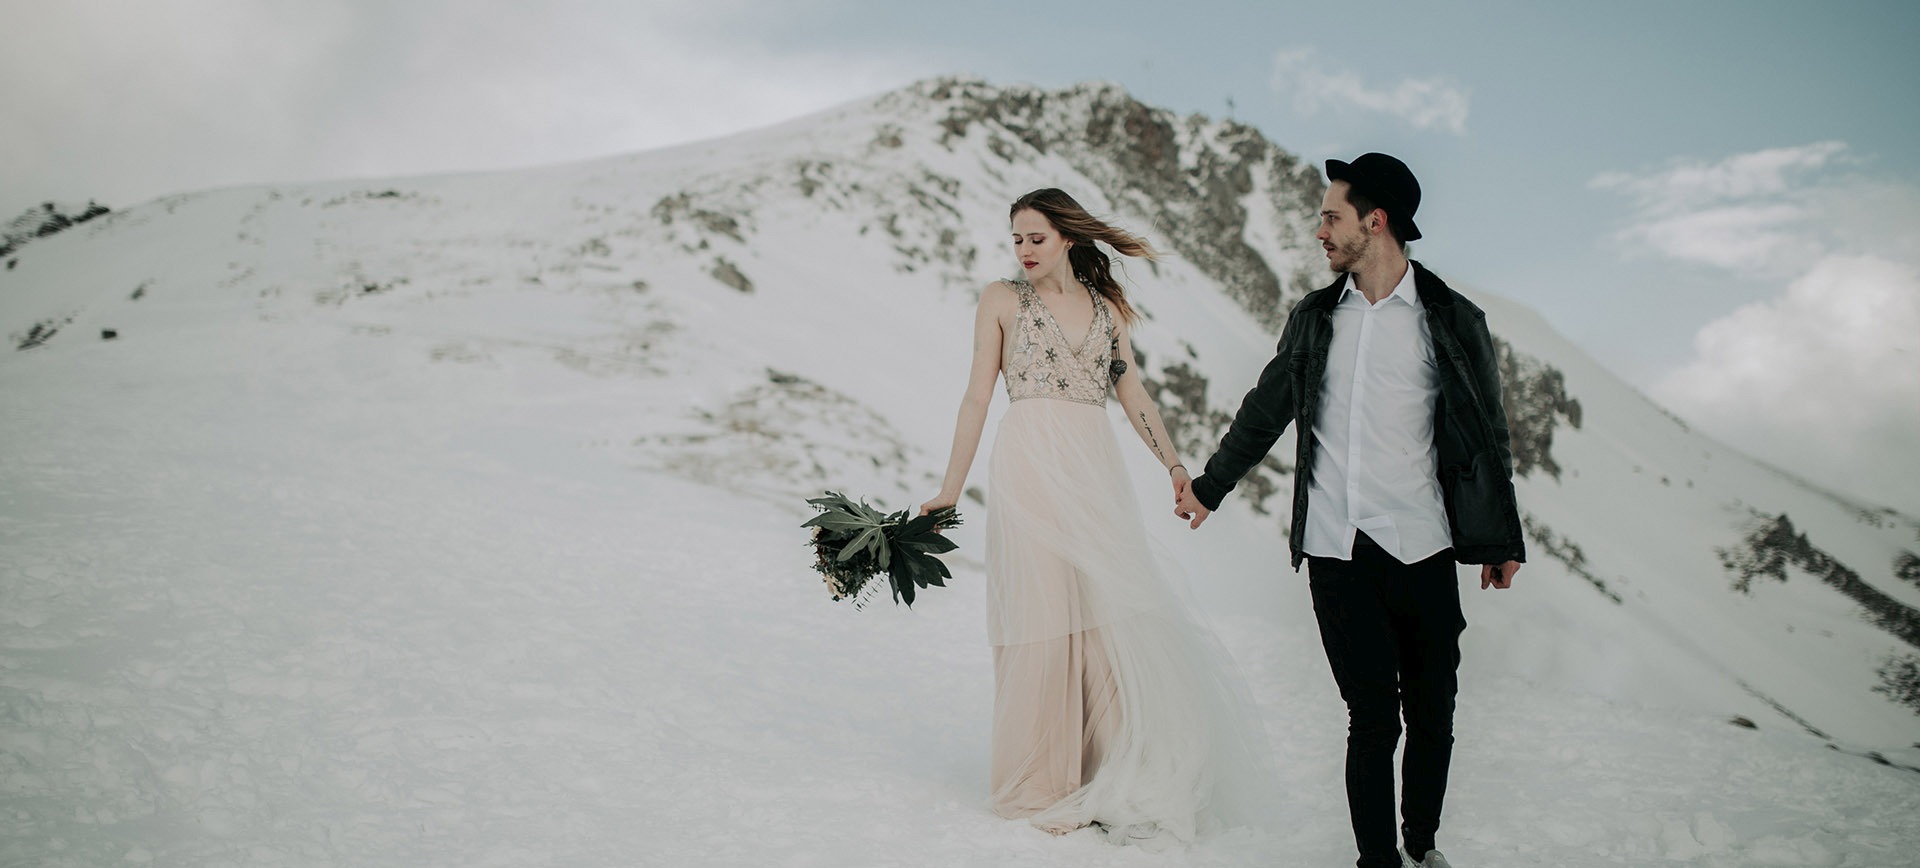 mountain elopement austria - winter wedding